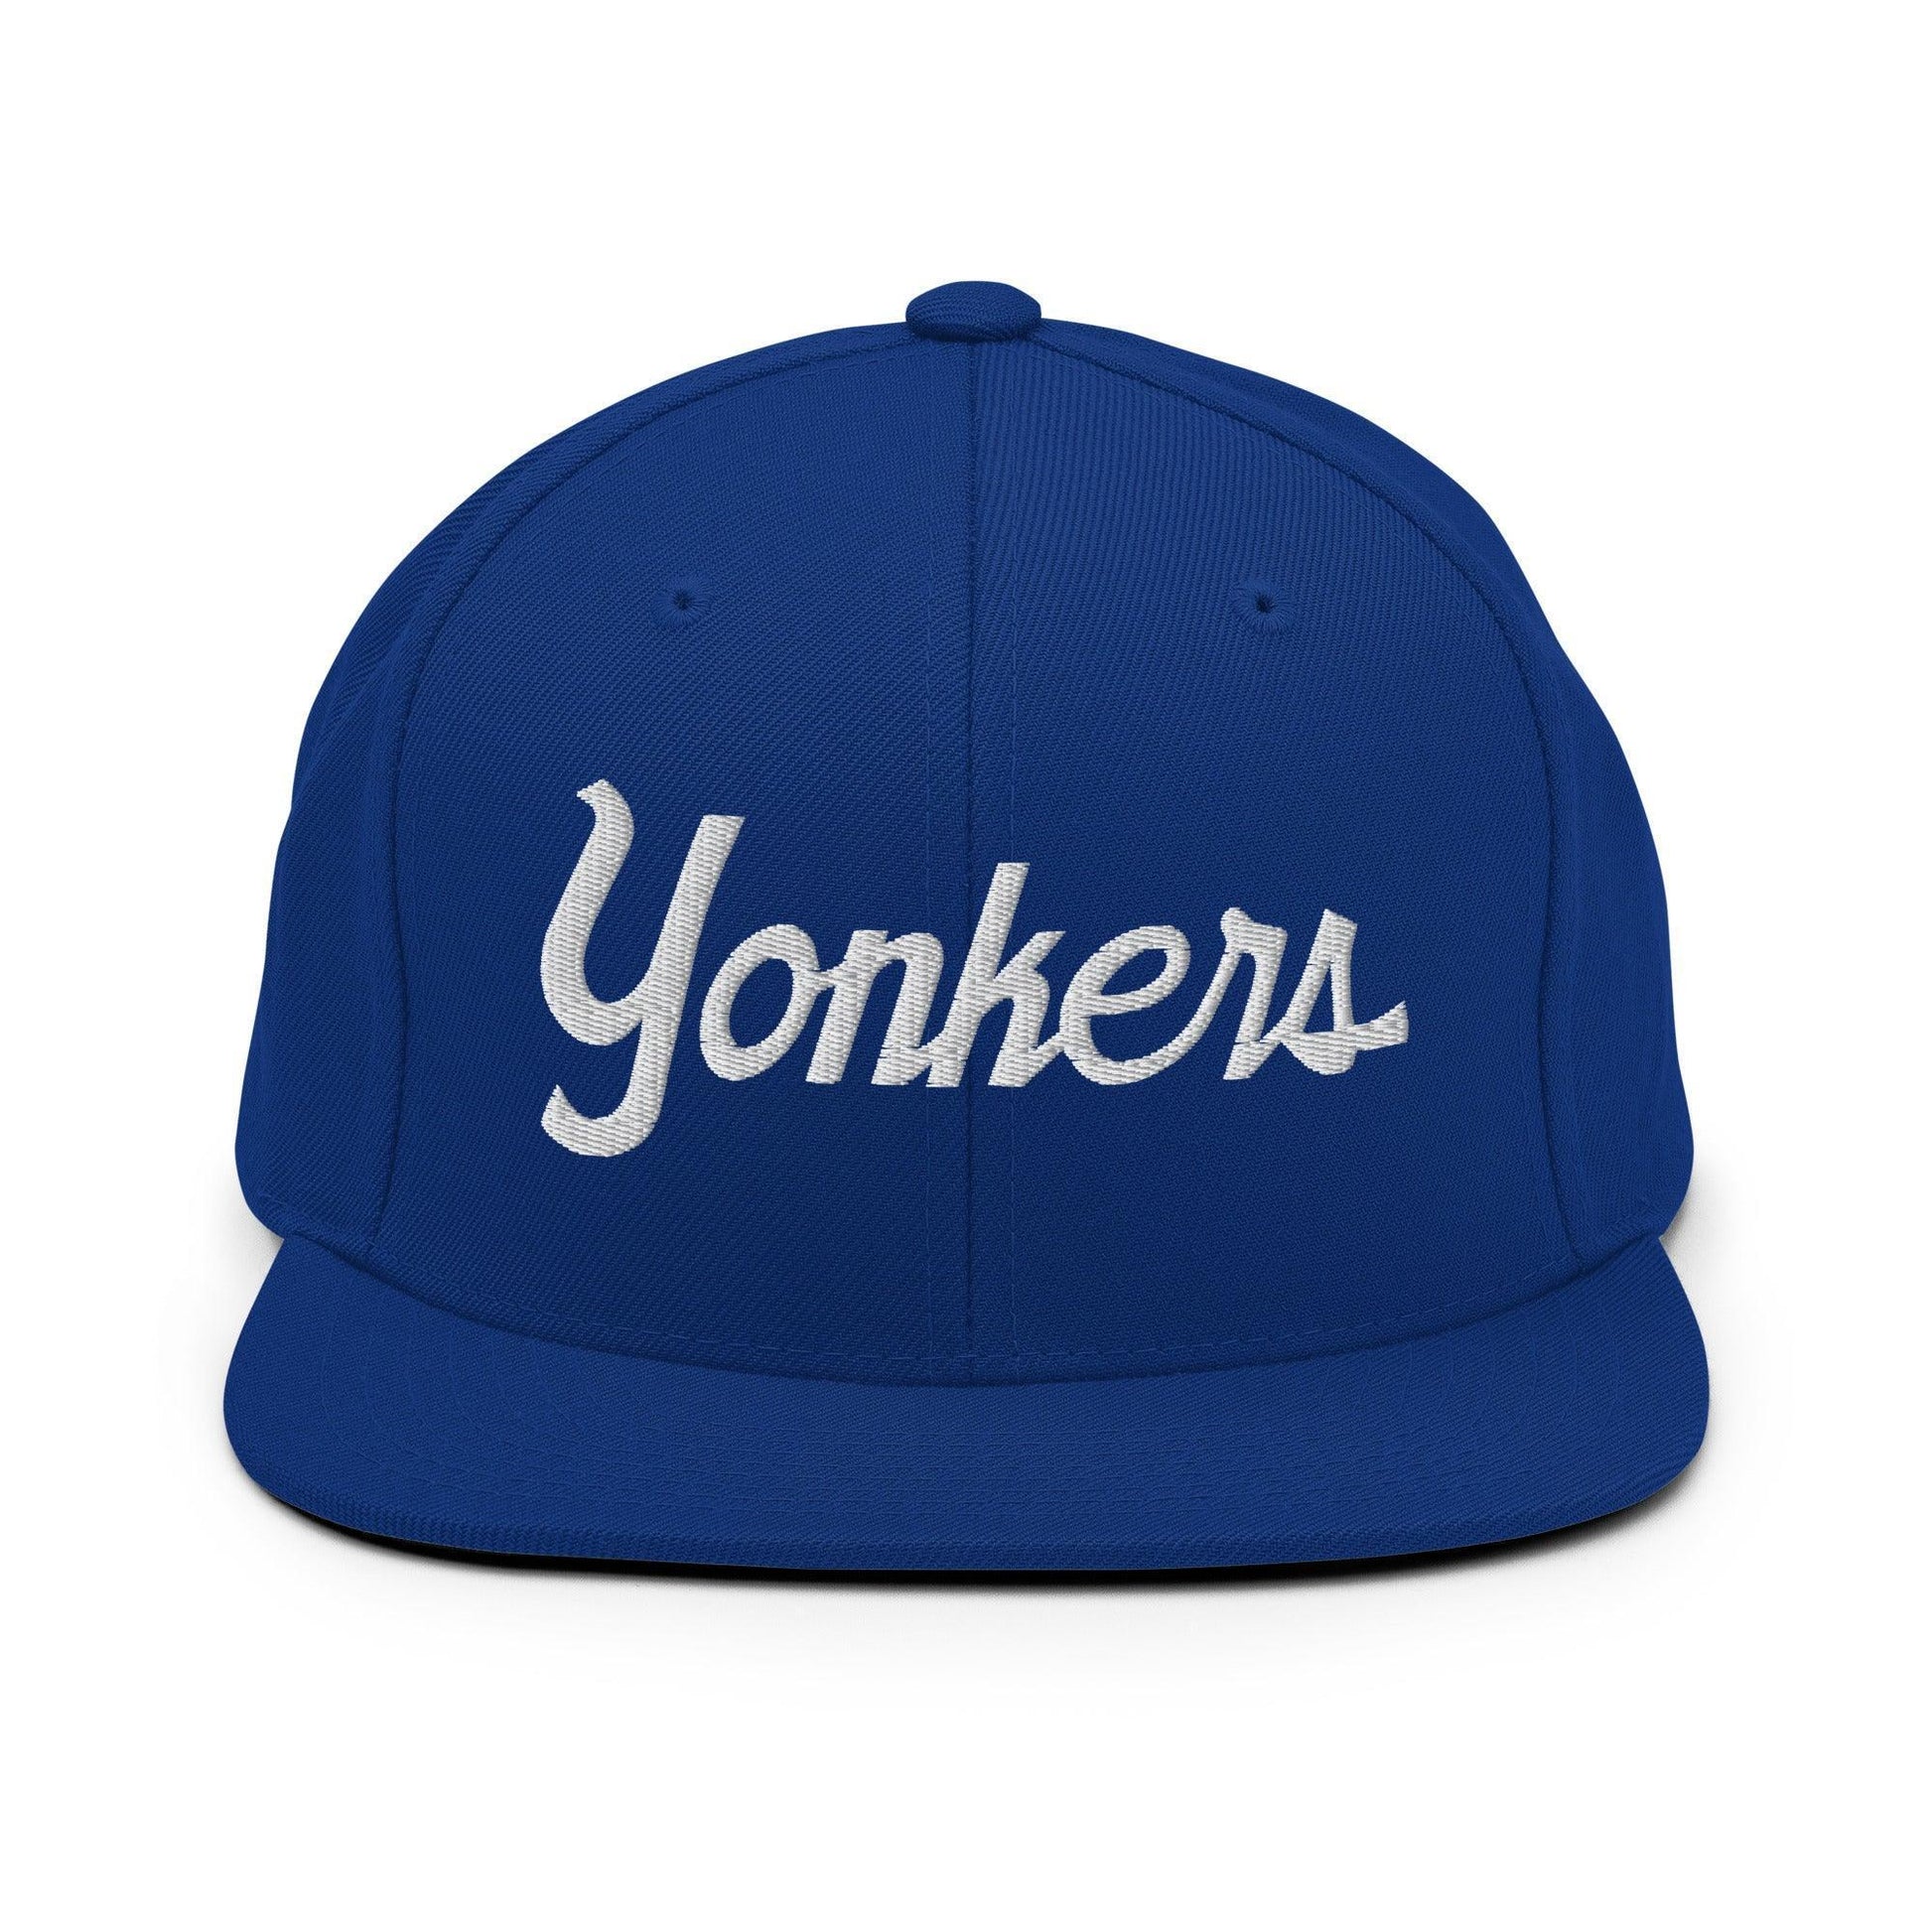 Yonkers Script Snapback Hat Royal Blue